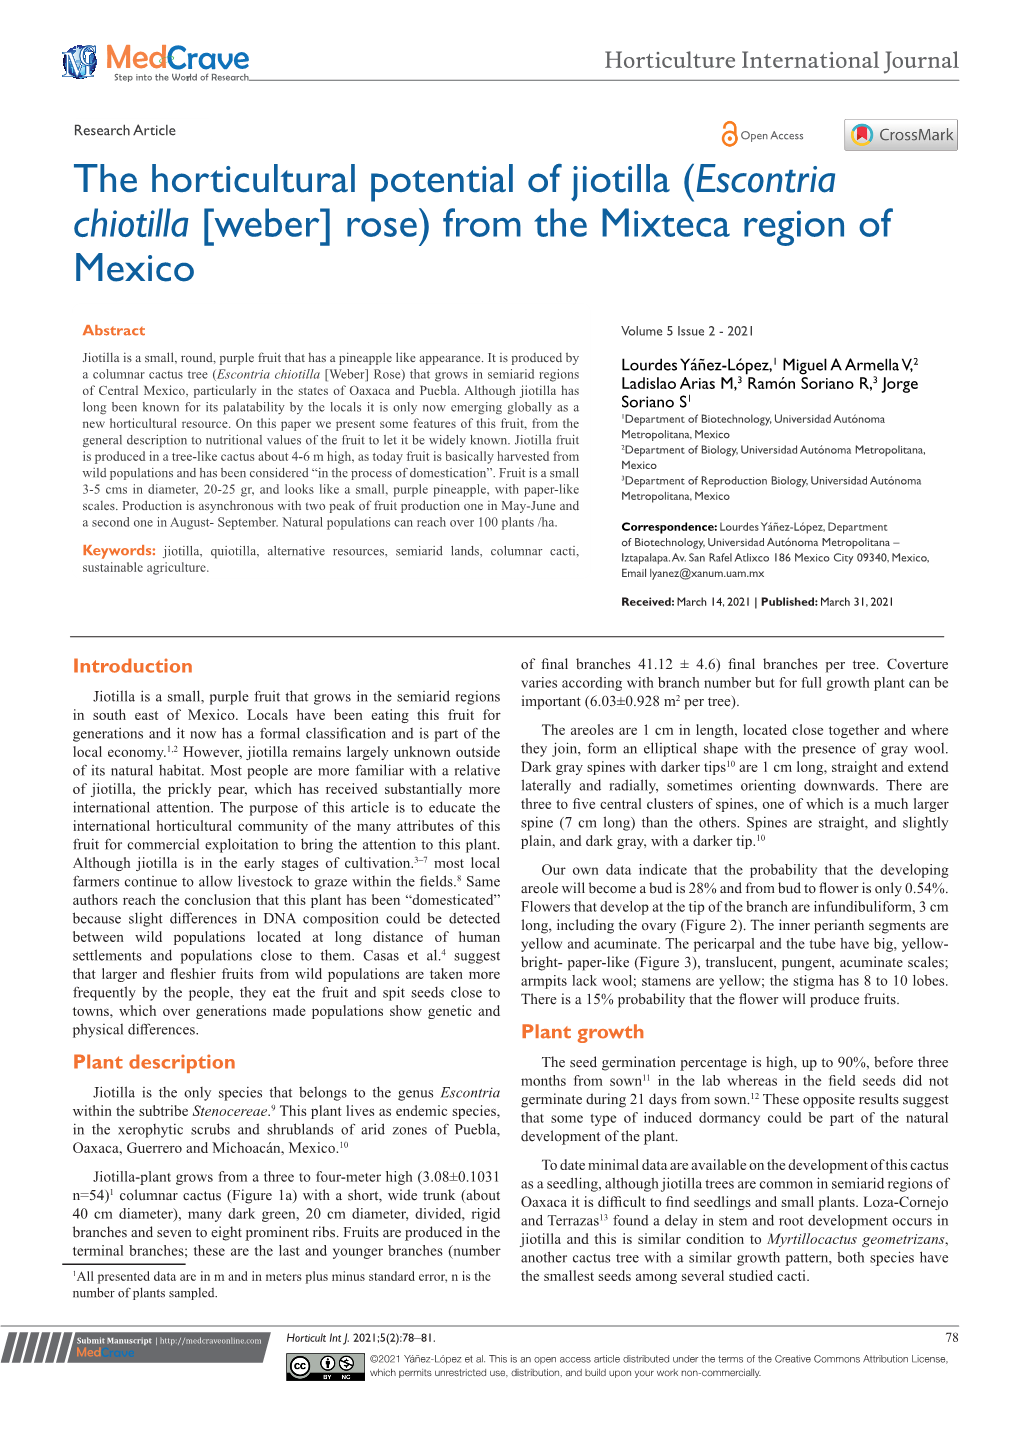 The Horticultural Potential of Jiotilla (Escontria Chiotilla [Weber] Rose) from the Mixteca Region of Mexico